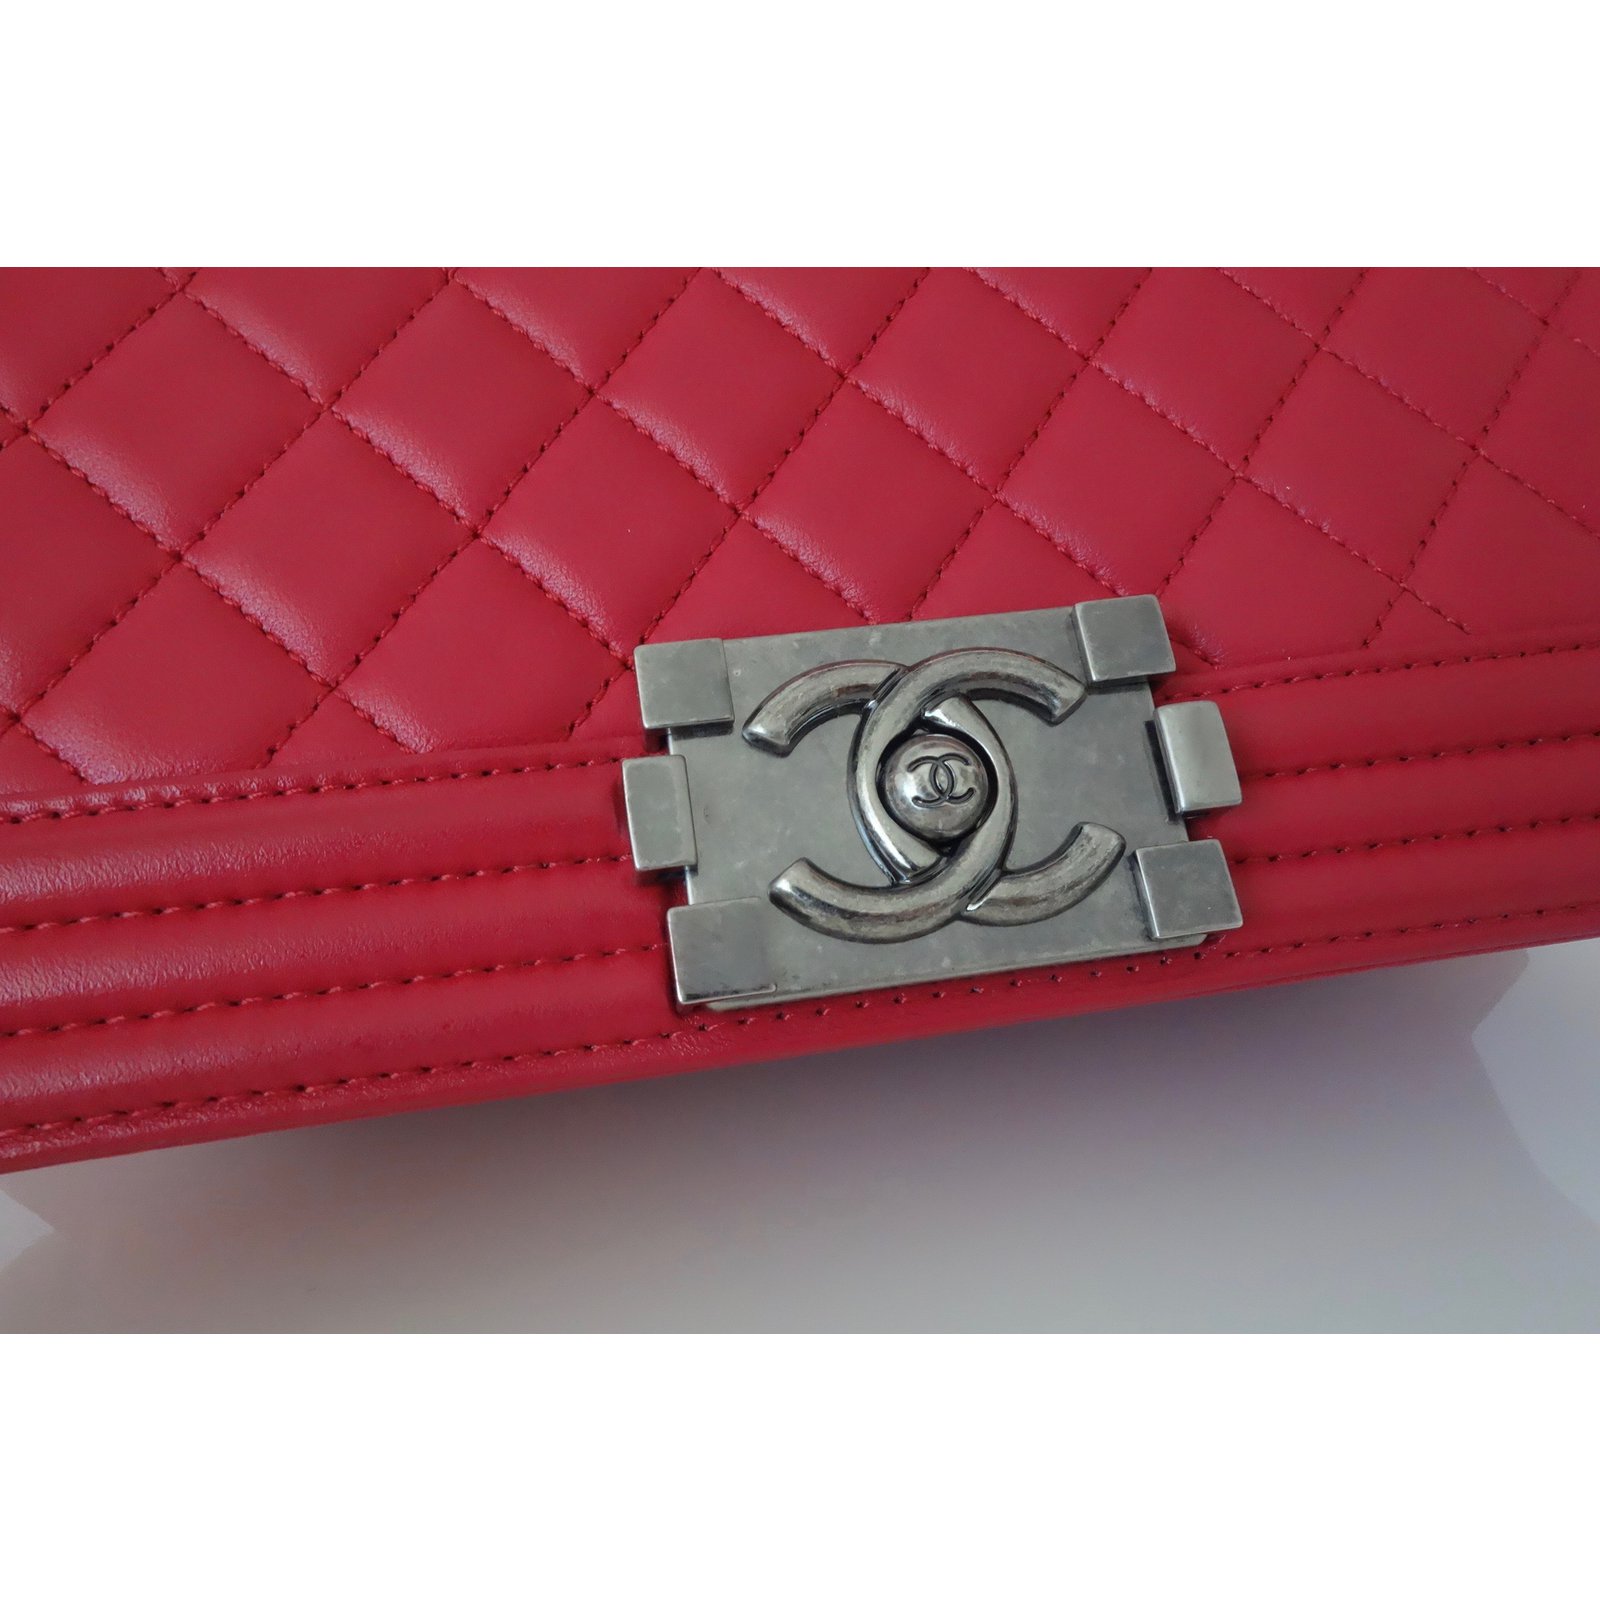 Chanel Boy Bag (Raspberry/Pink)